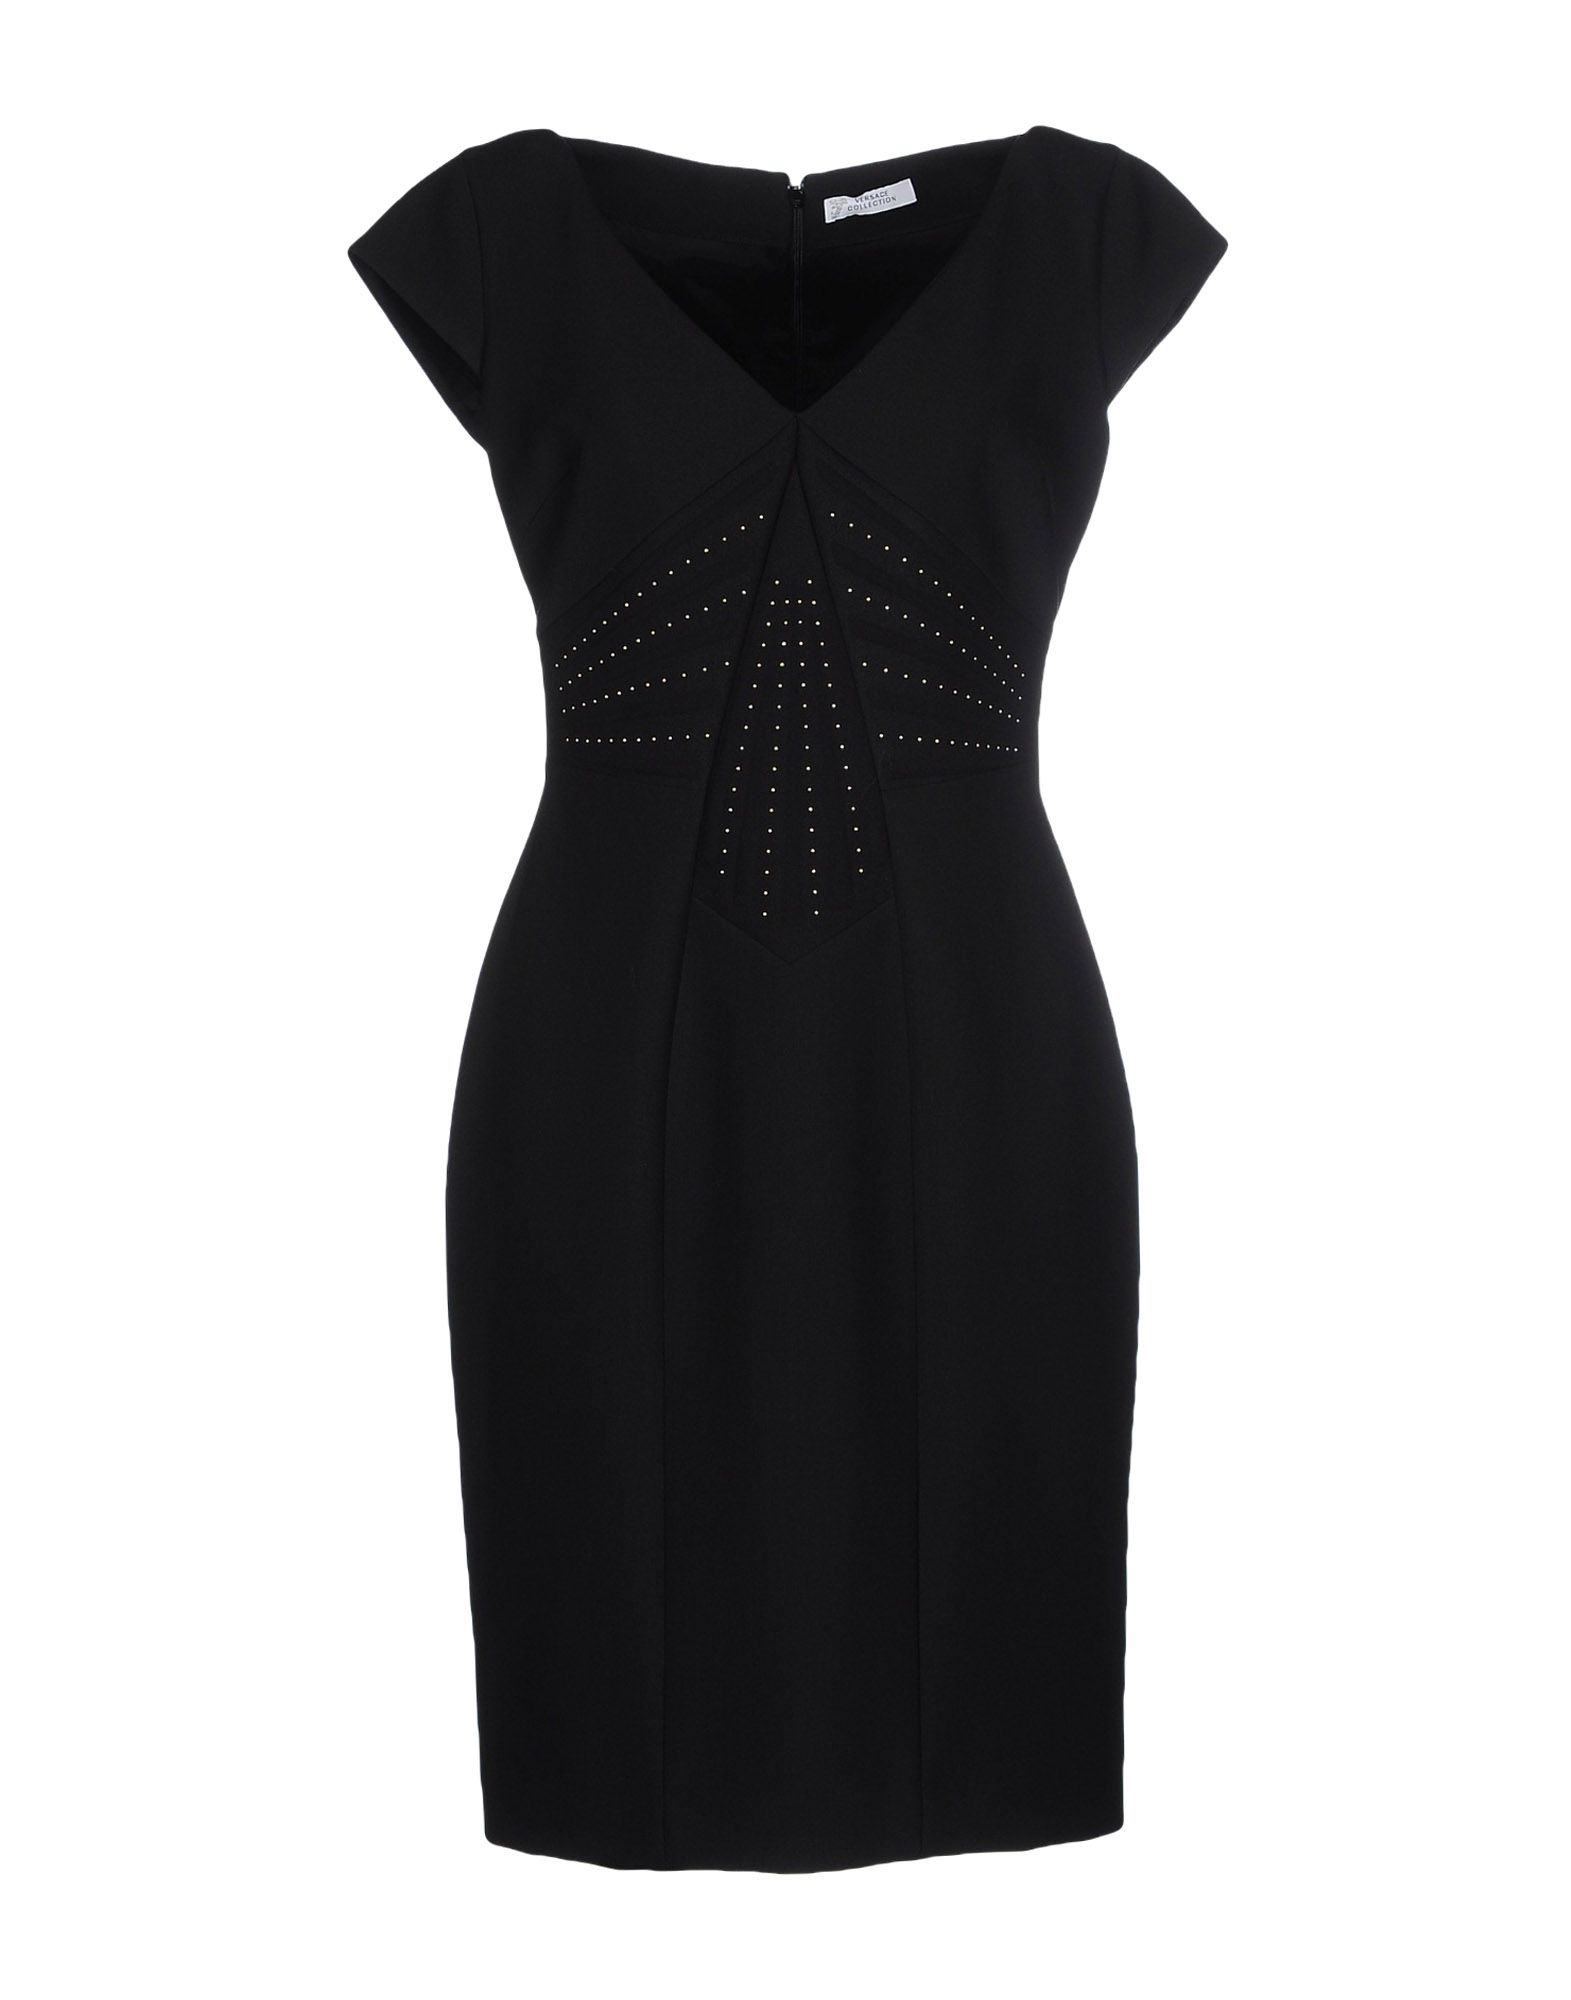 Lyst - Versace Short Dress in Black